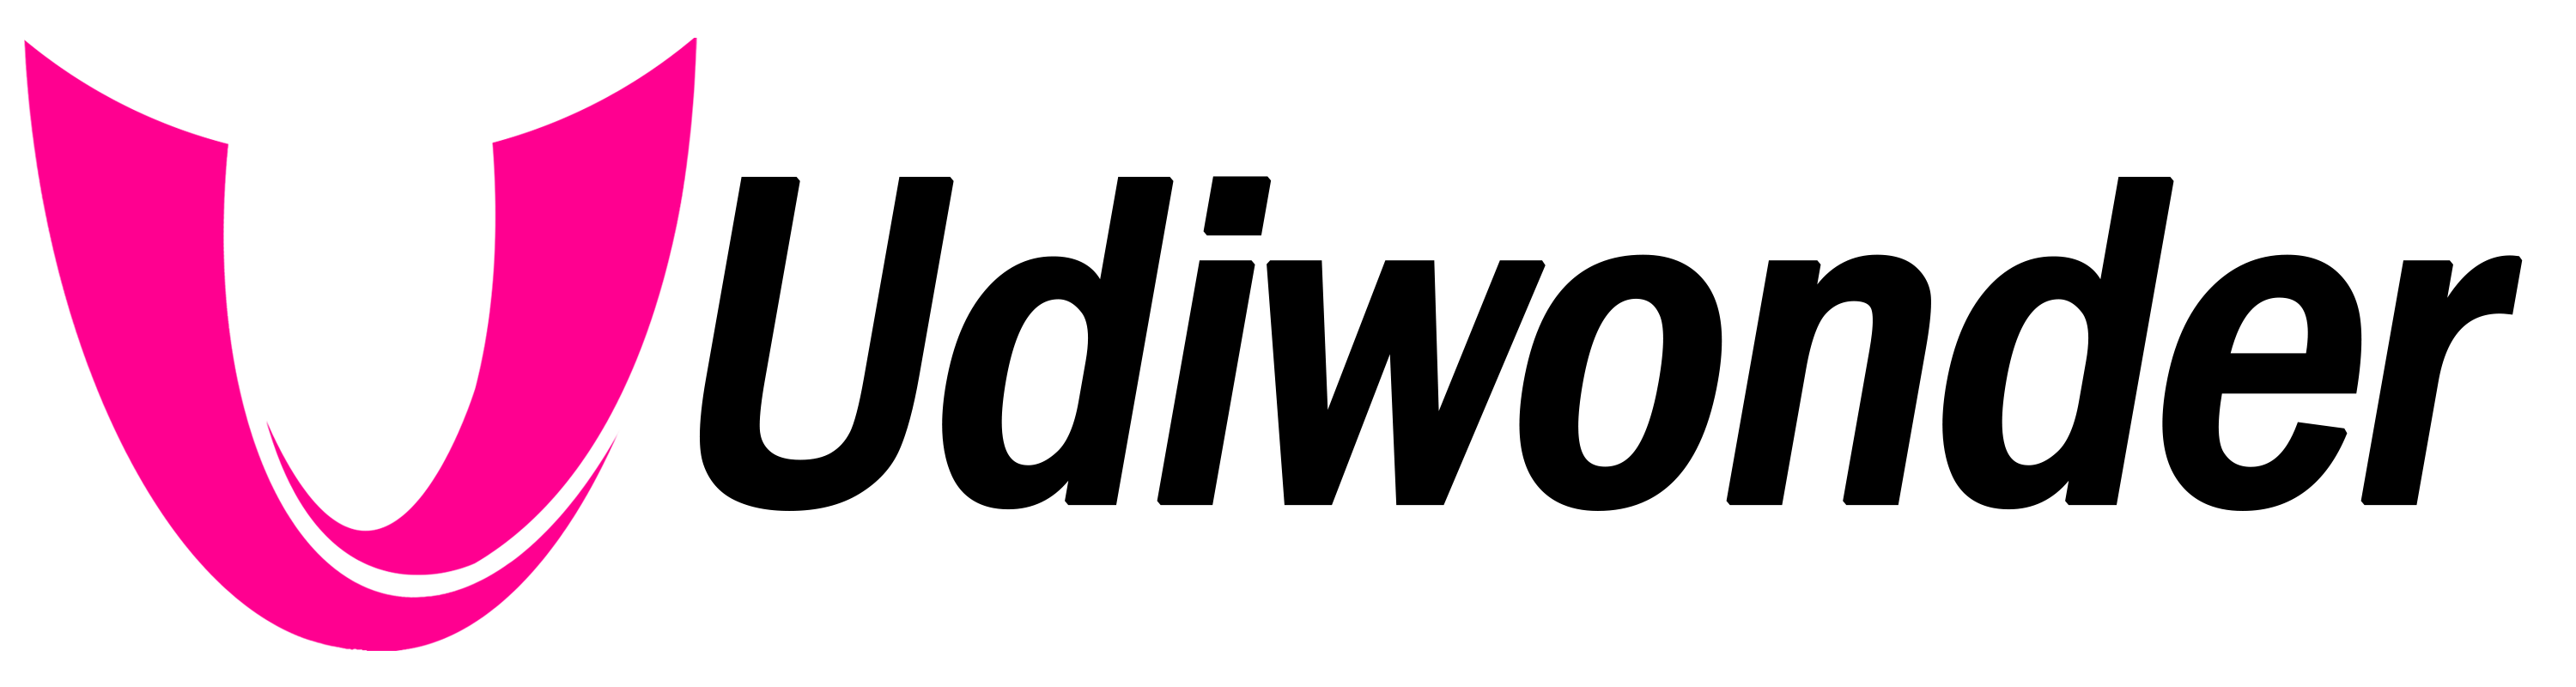 Udiwonder Logo White